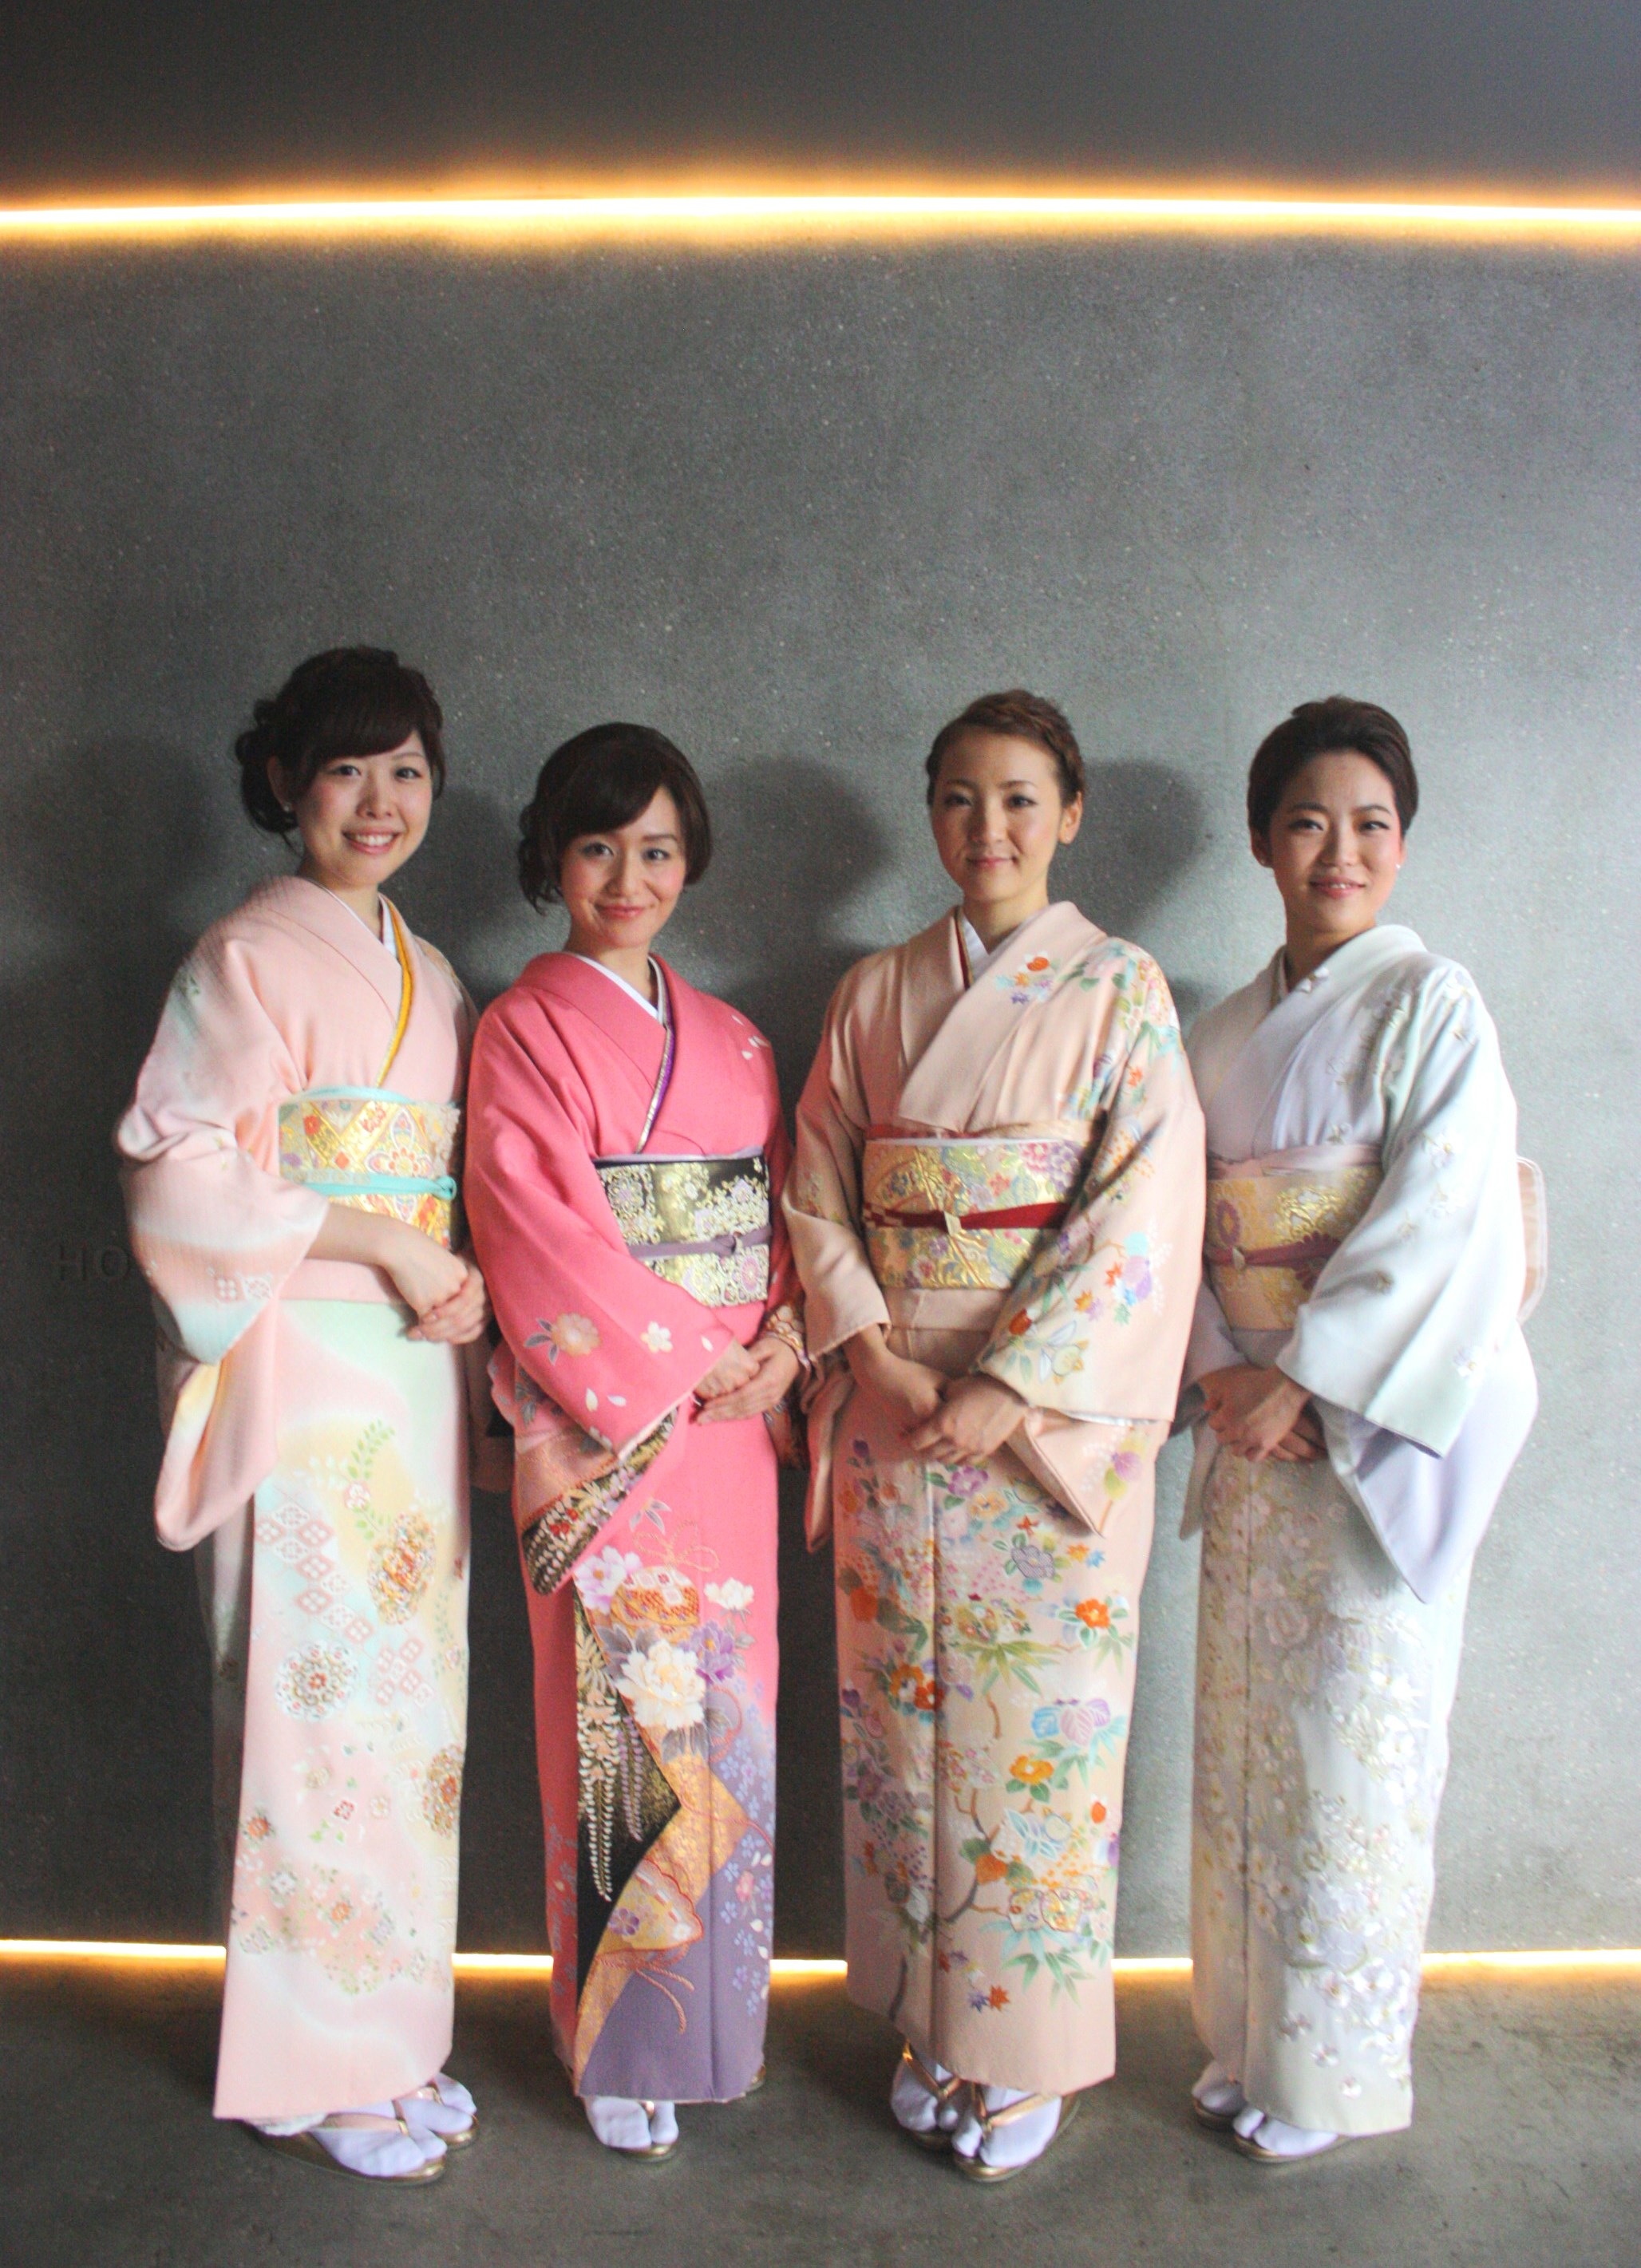 Friendly bi-lingual staff at Hotel & Residence Roppongi, Japan